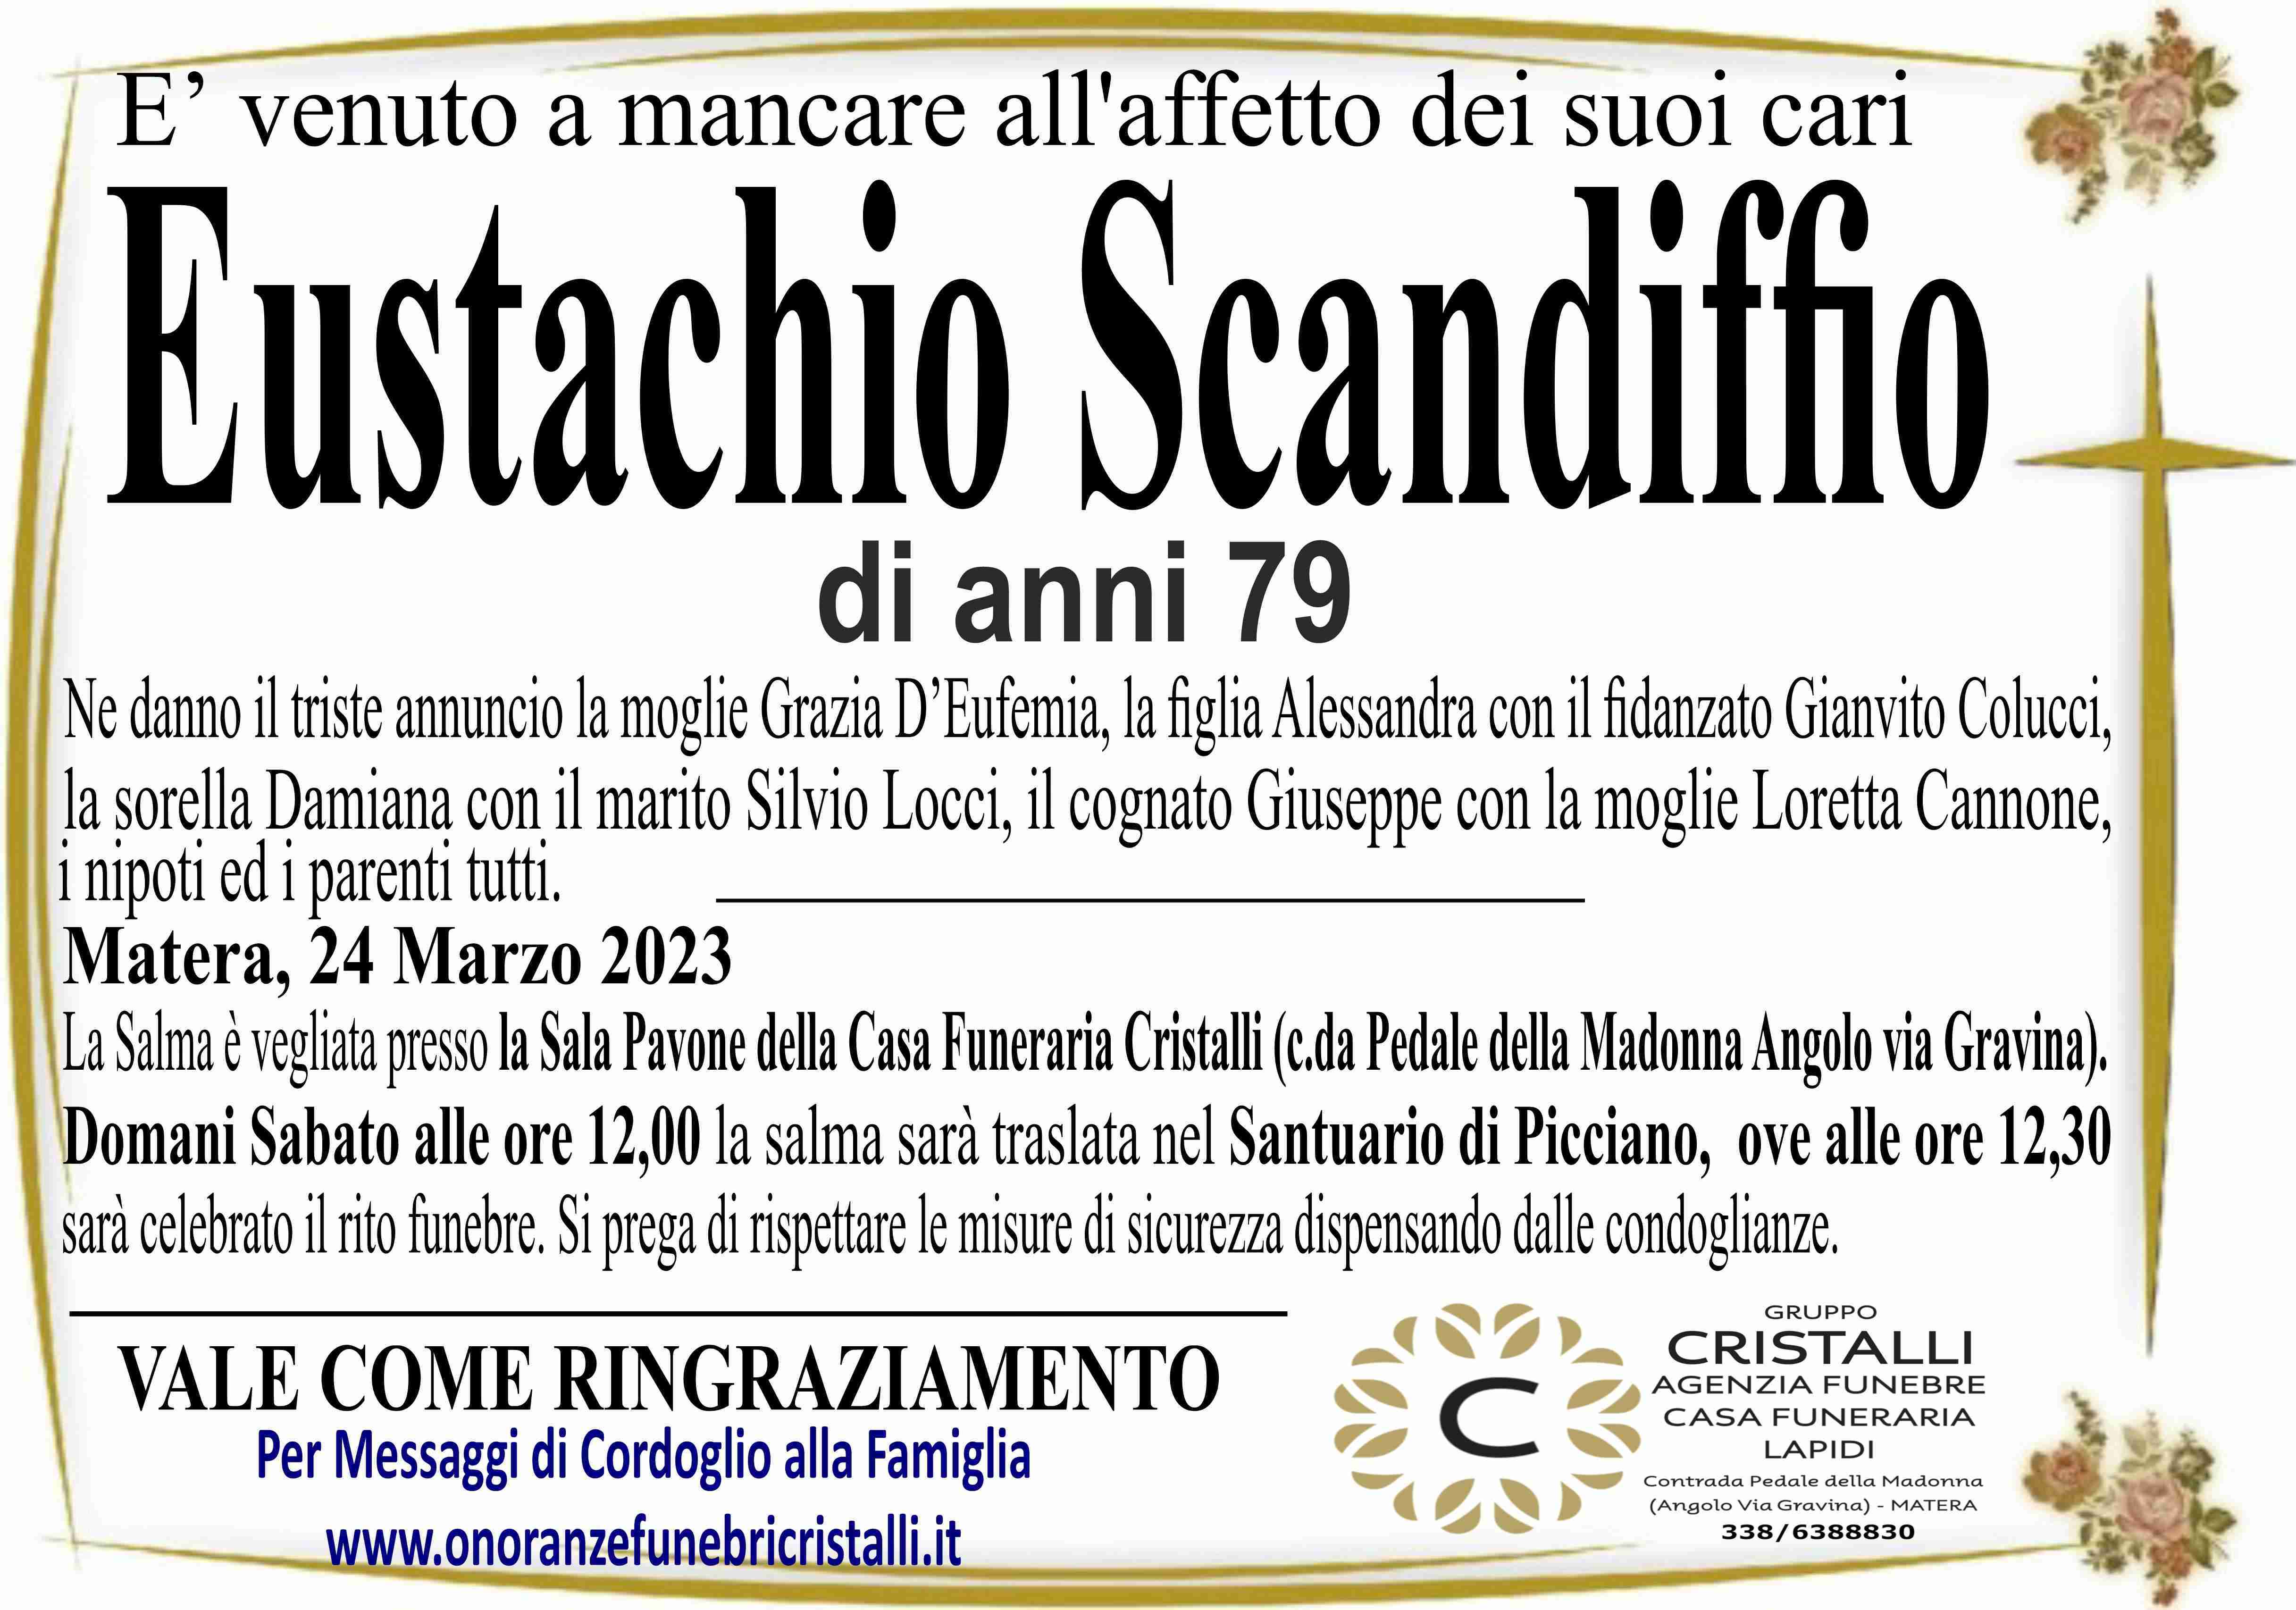 Eustachio Scandiffio